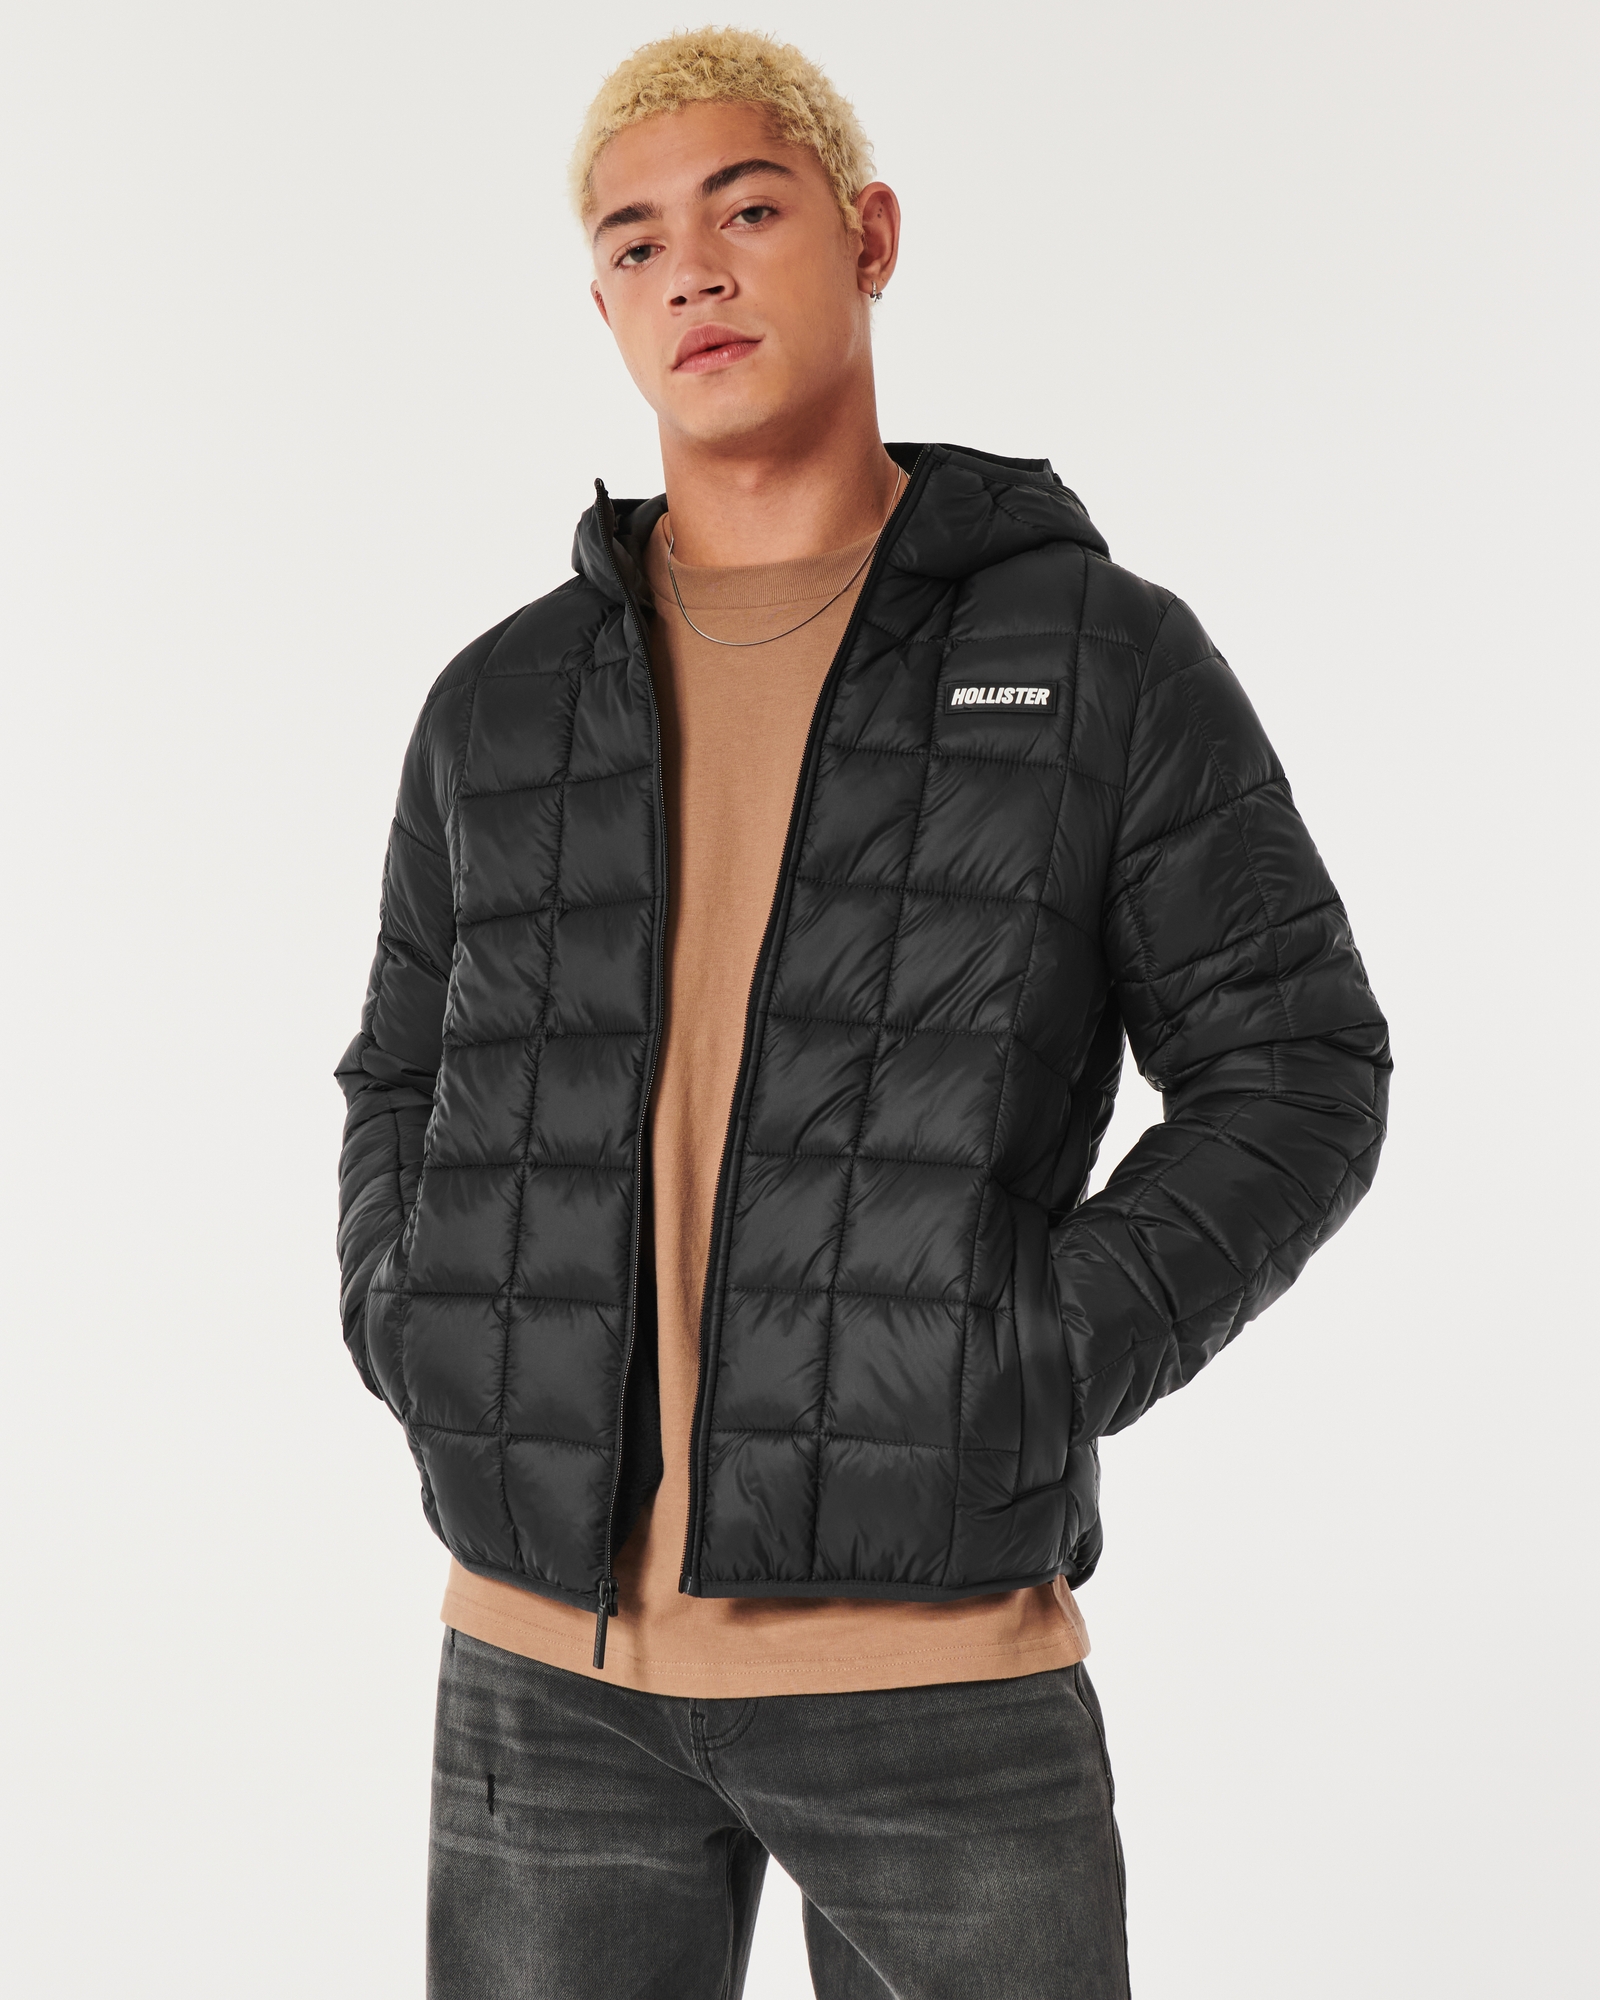 Black hollister size small Sherpa Lined / fleece puffer jacket bargain RRP  £90